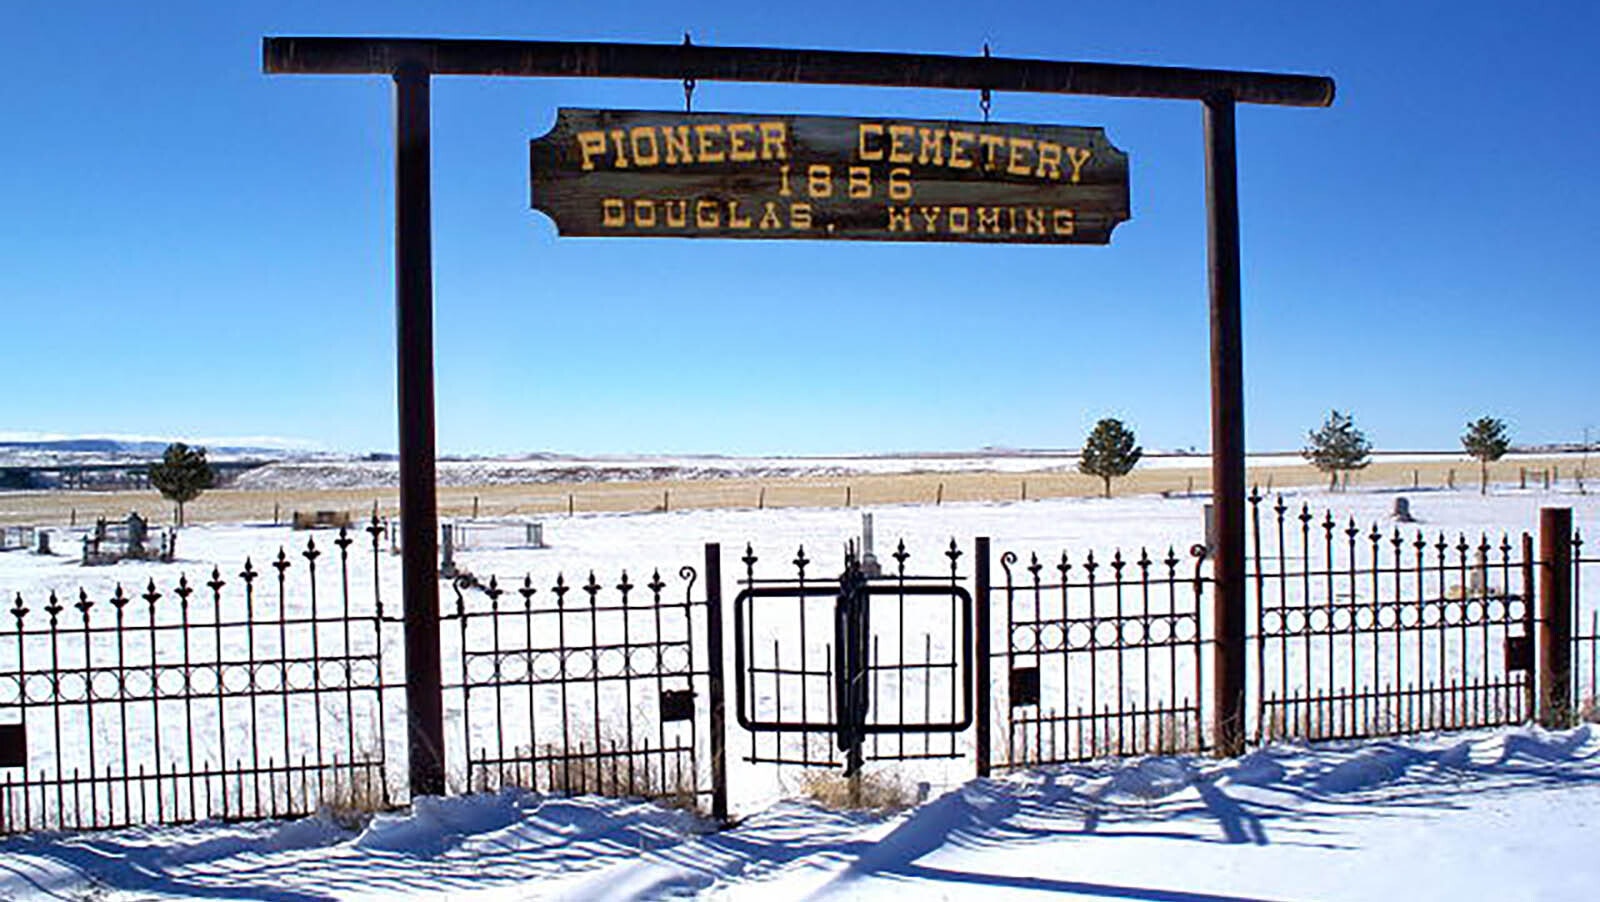 Trails pioneer cemetery douglas 12 22 23